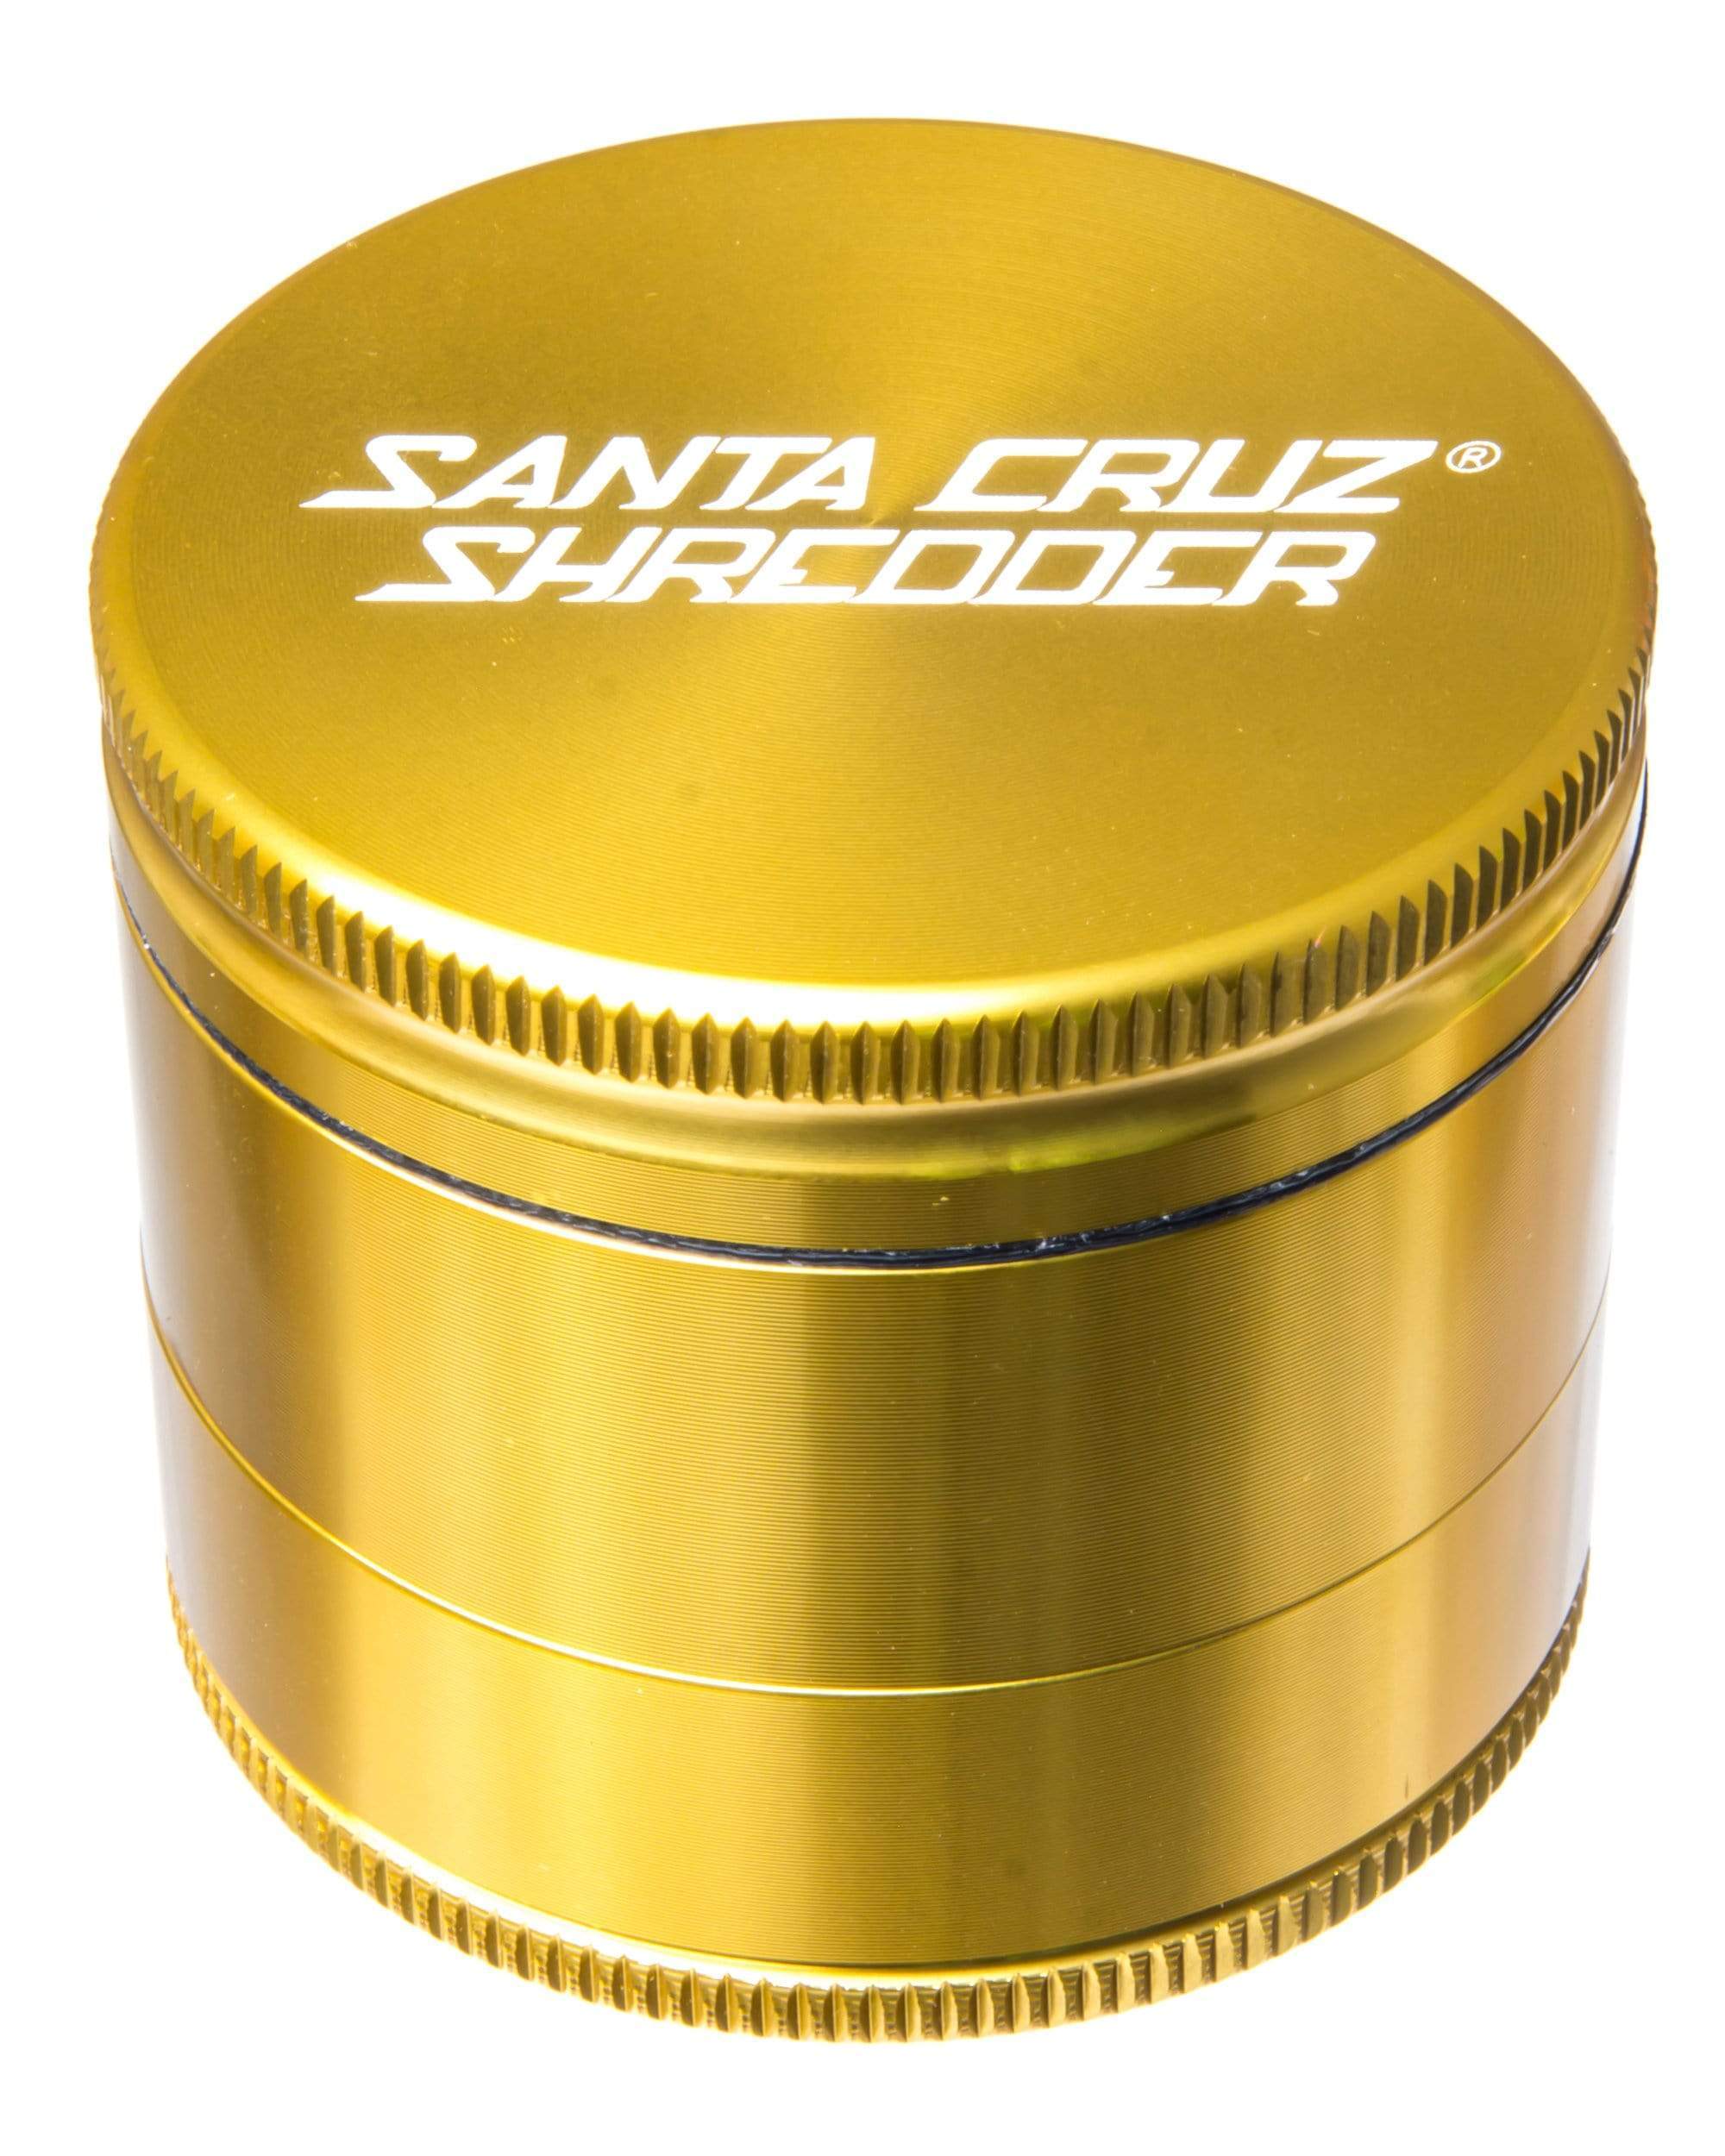 Santa Cruz Shredder Gold Medium 3 Piece Herb Grinder